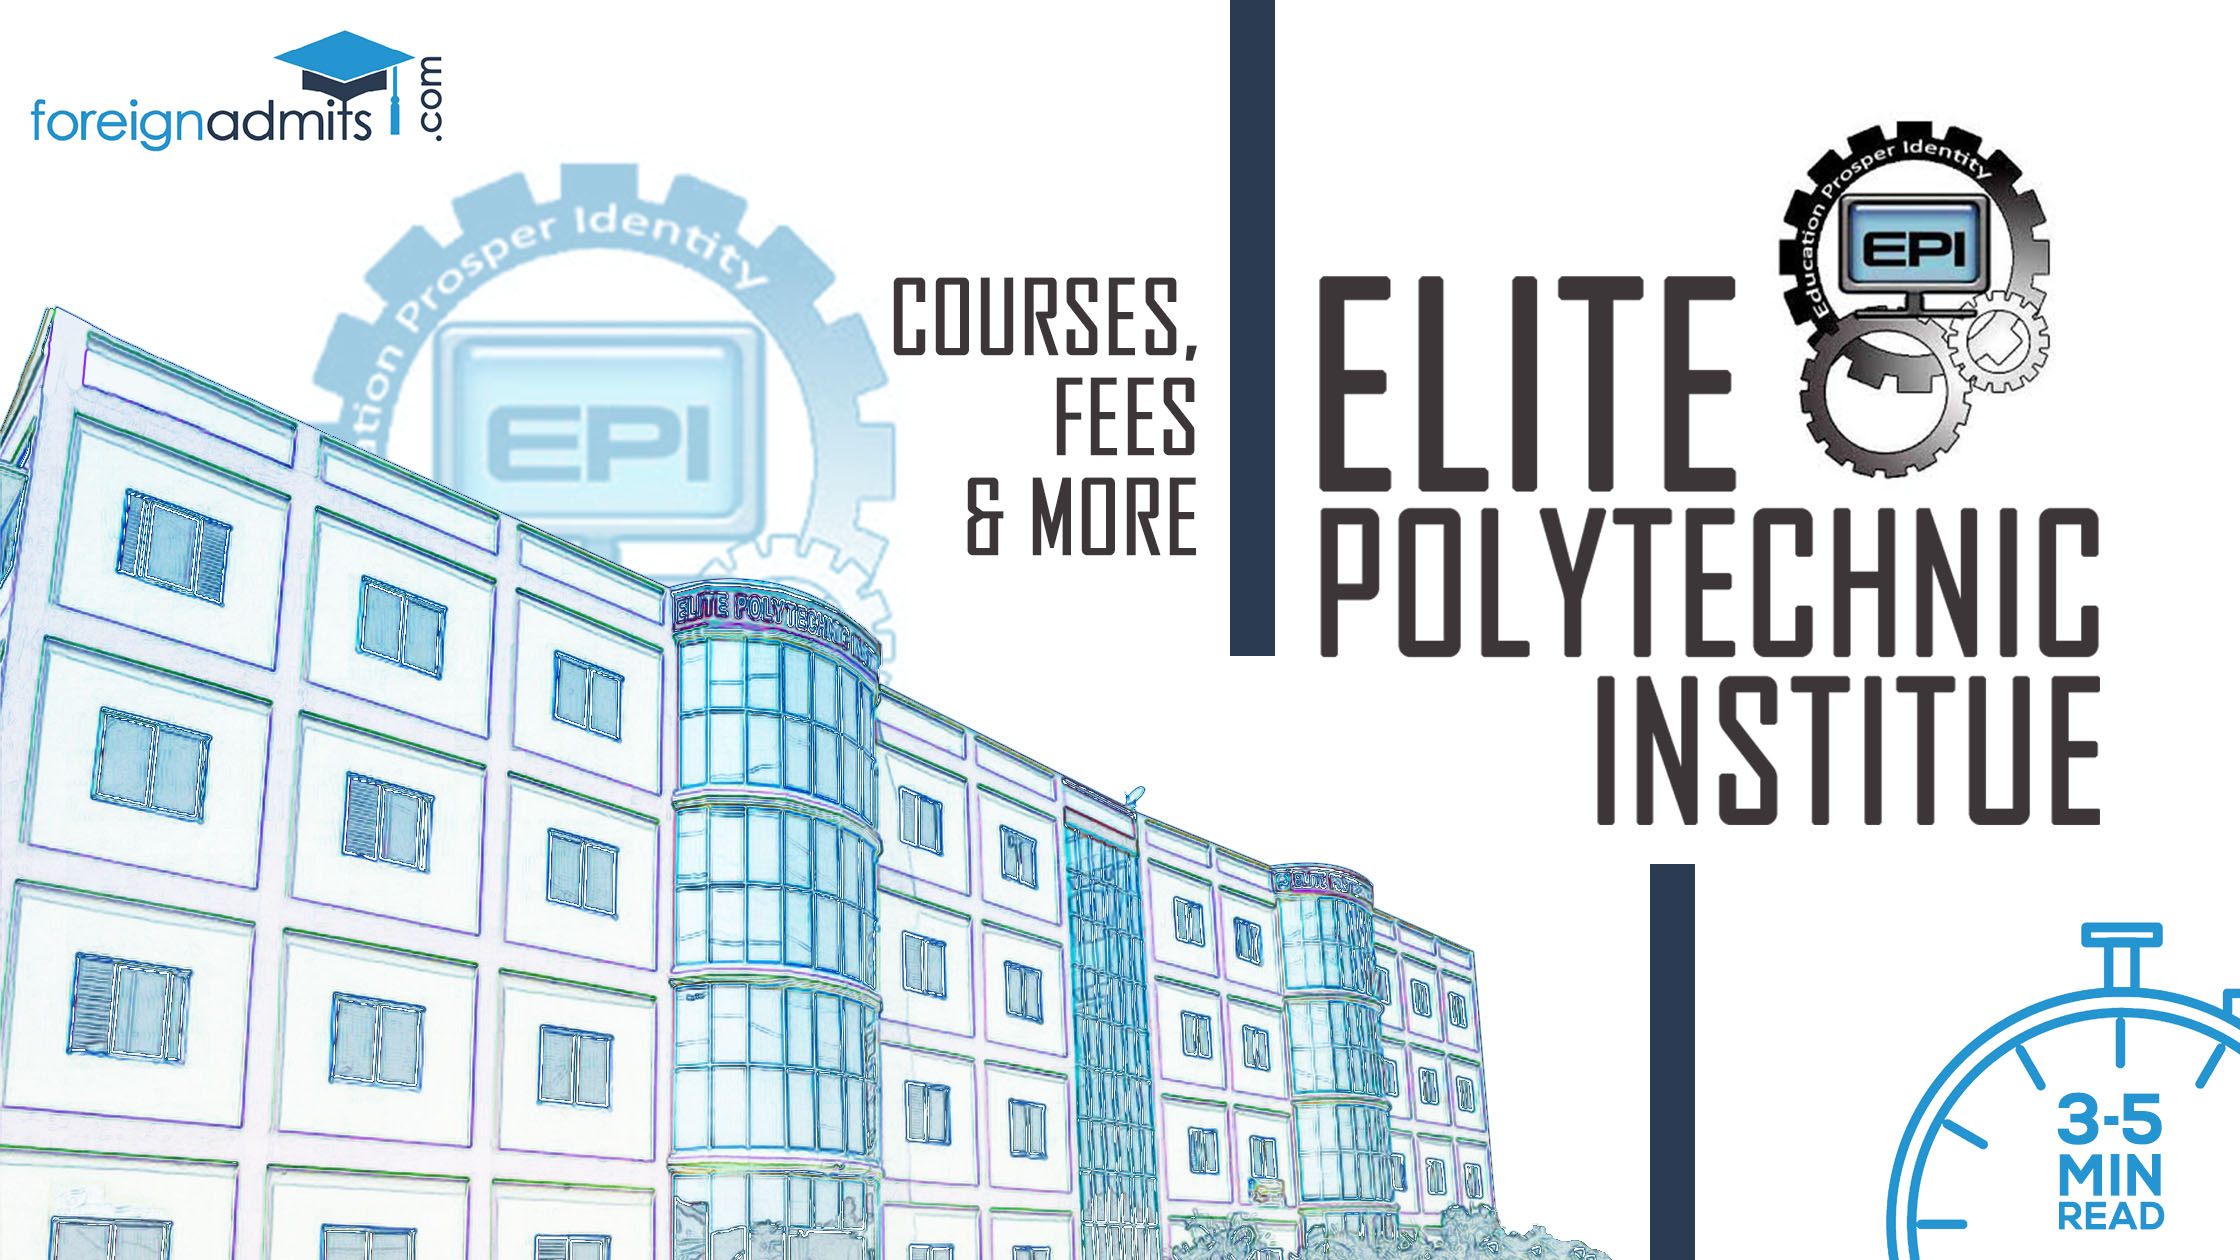 Elite Polytechnic Institute – Top Courses, Fees, & More